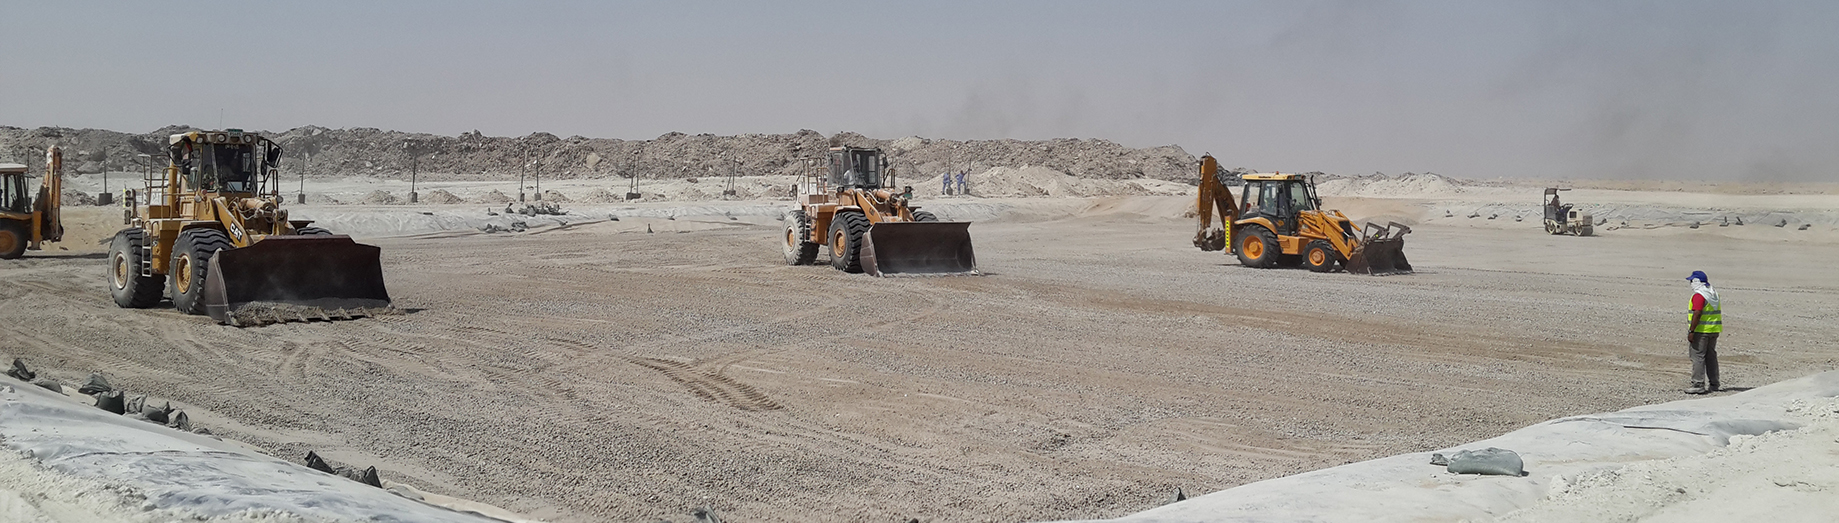 Abu Dhabi Landfill Liquid and Solid Hazardous Waste Cells